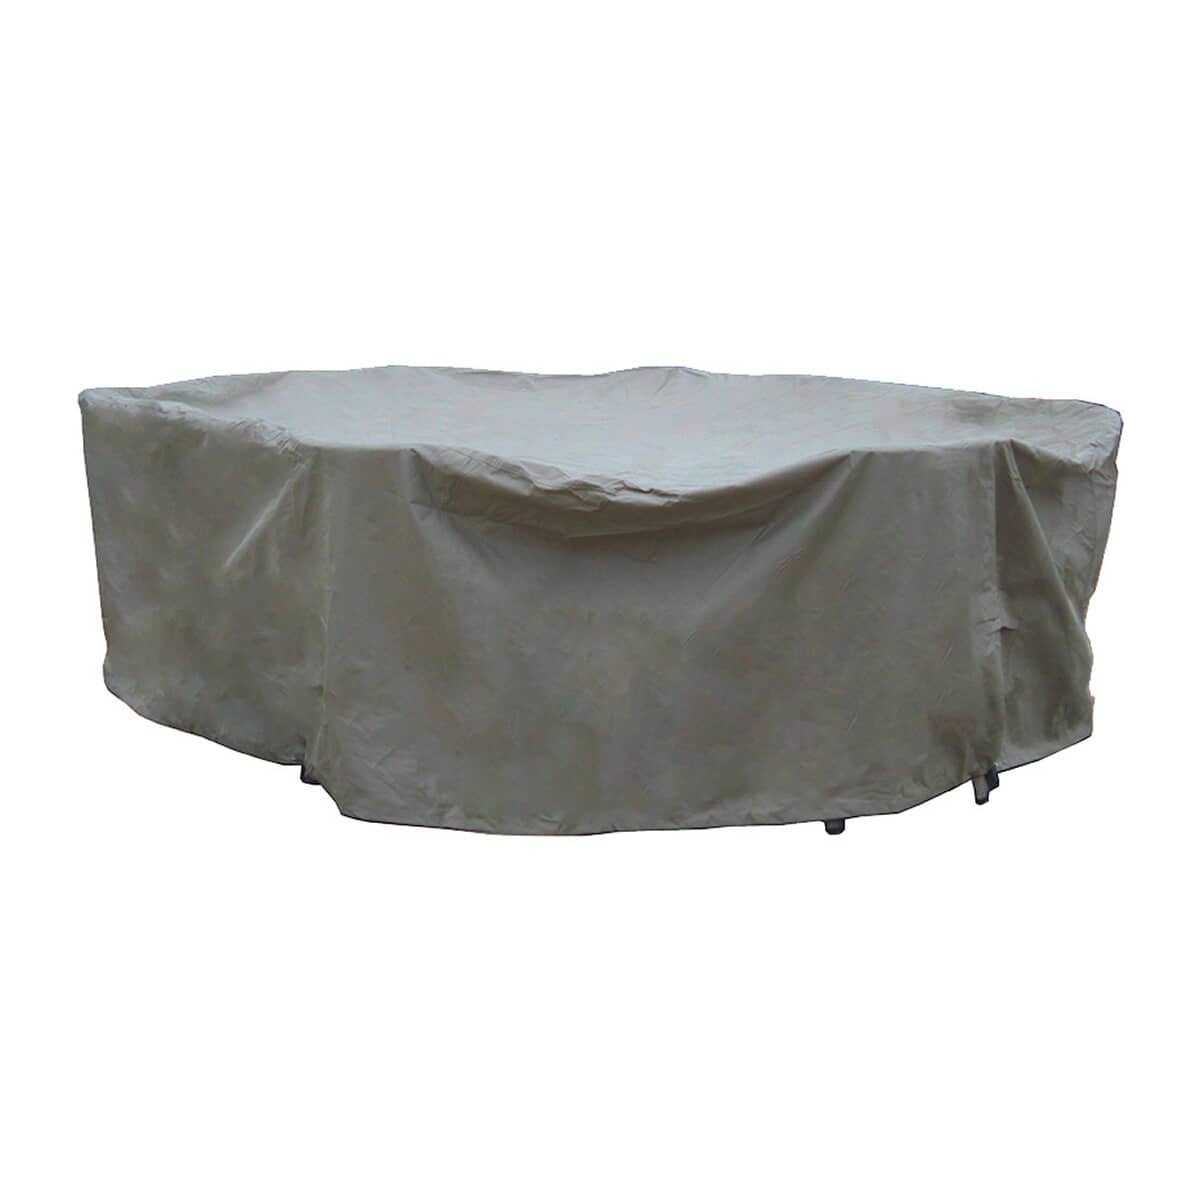 Bramblecrest 220 x 145cm Elliptical Table Set Cover - Khaki